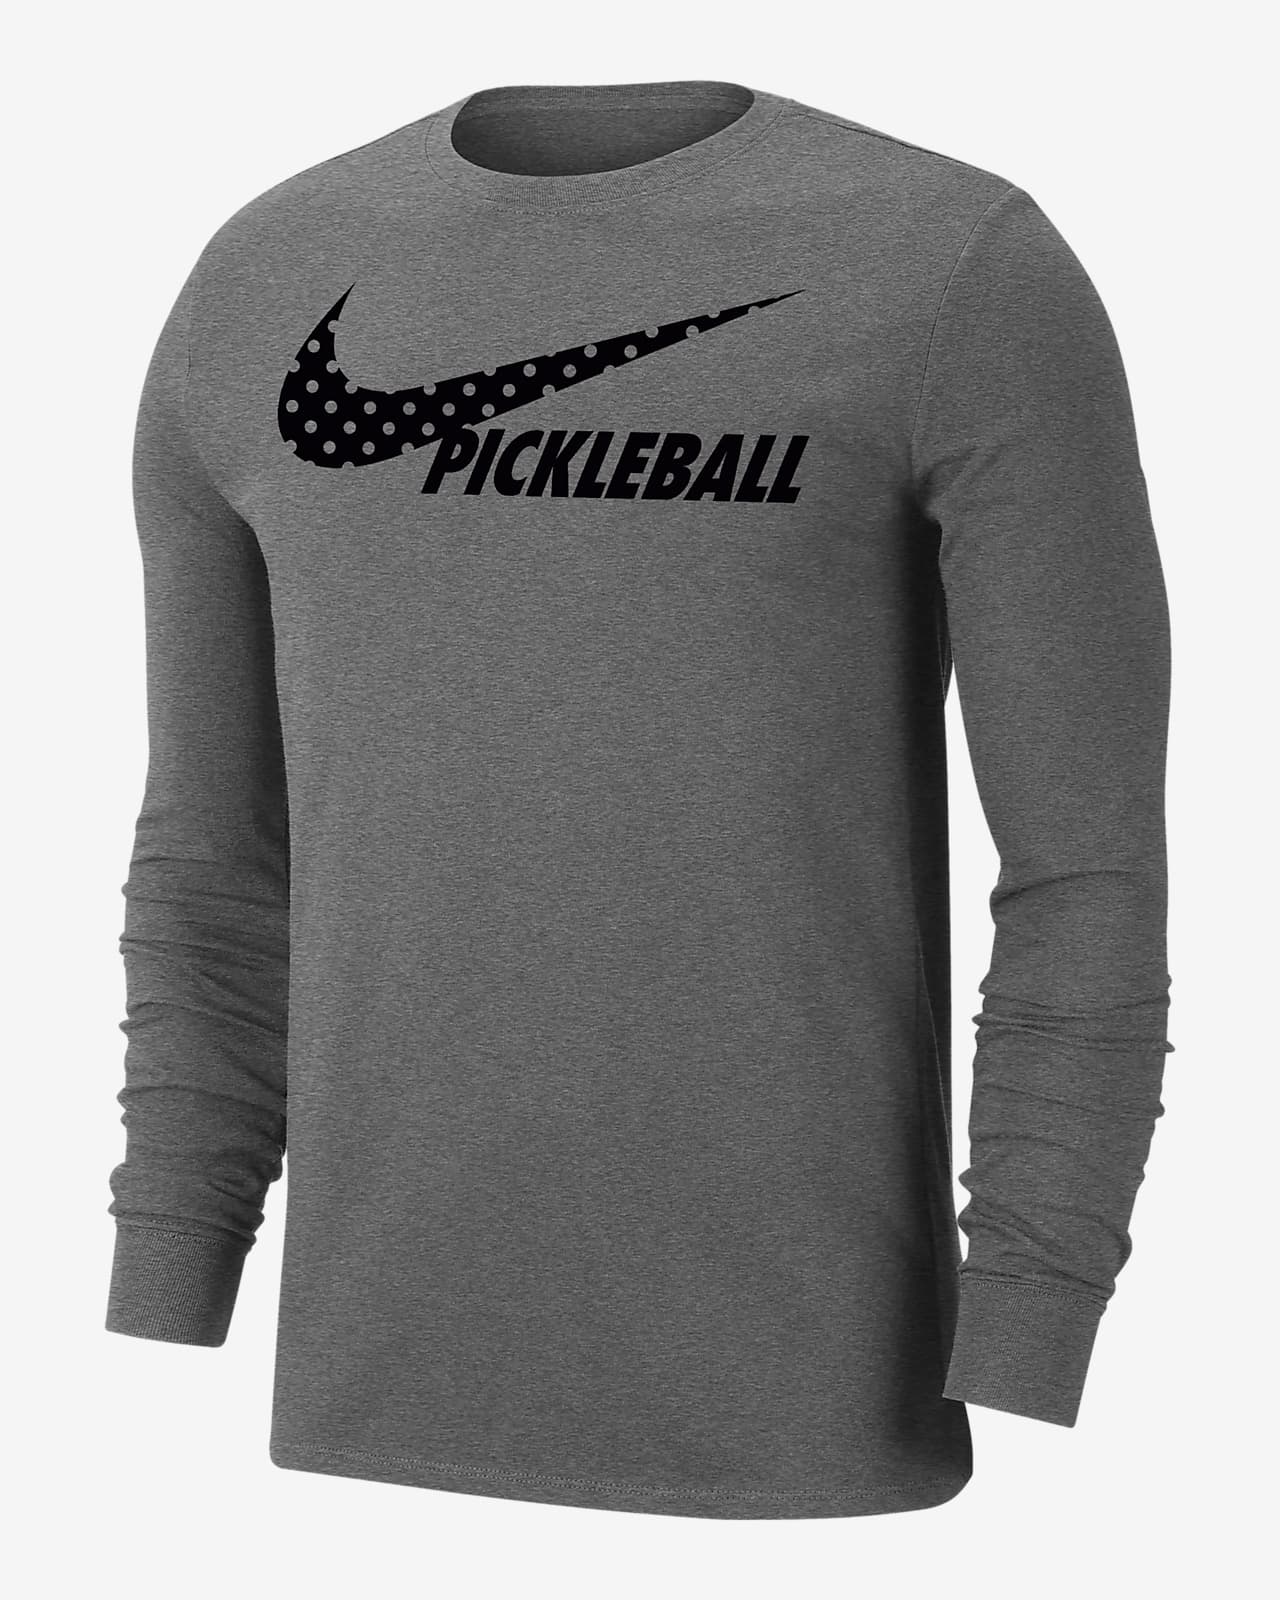 Nike Dri-FIT Men's Long-Sleeve Pickleball T-Shirt